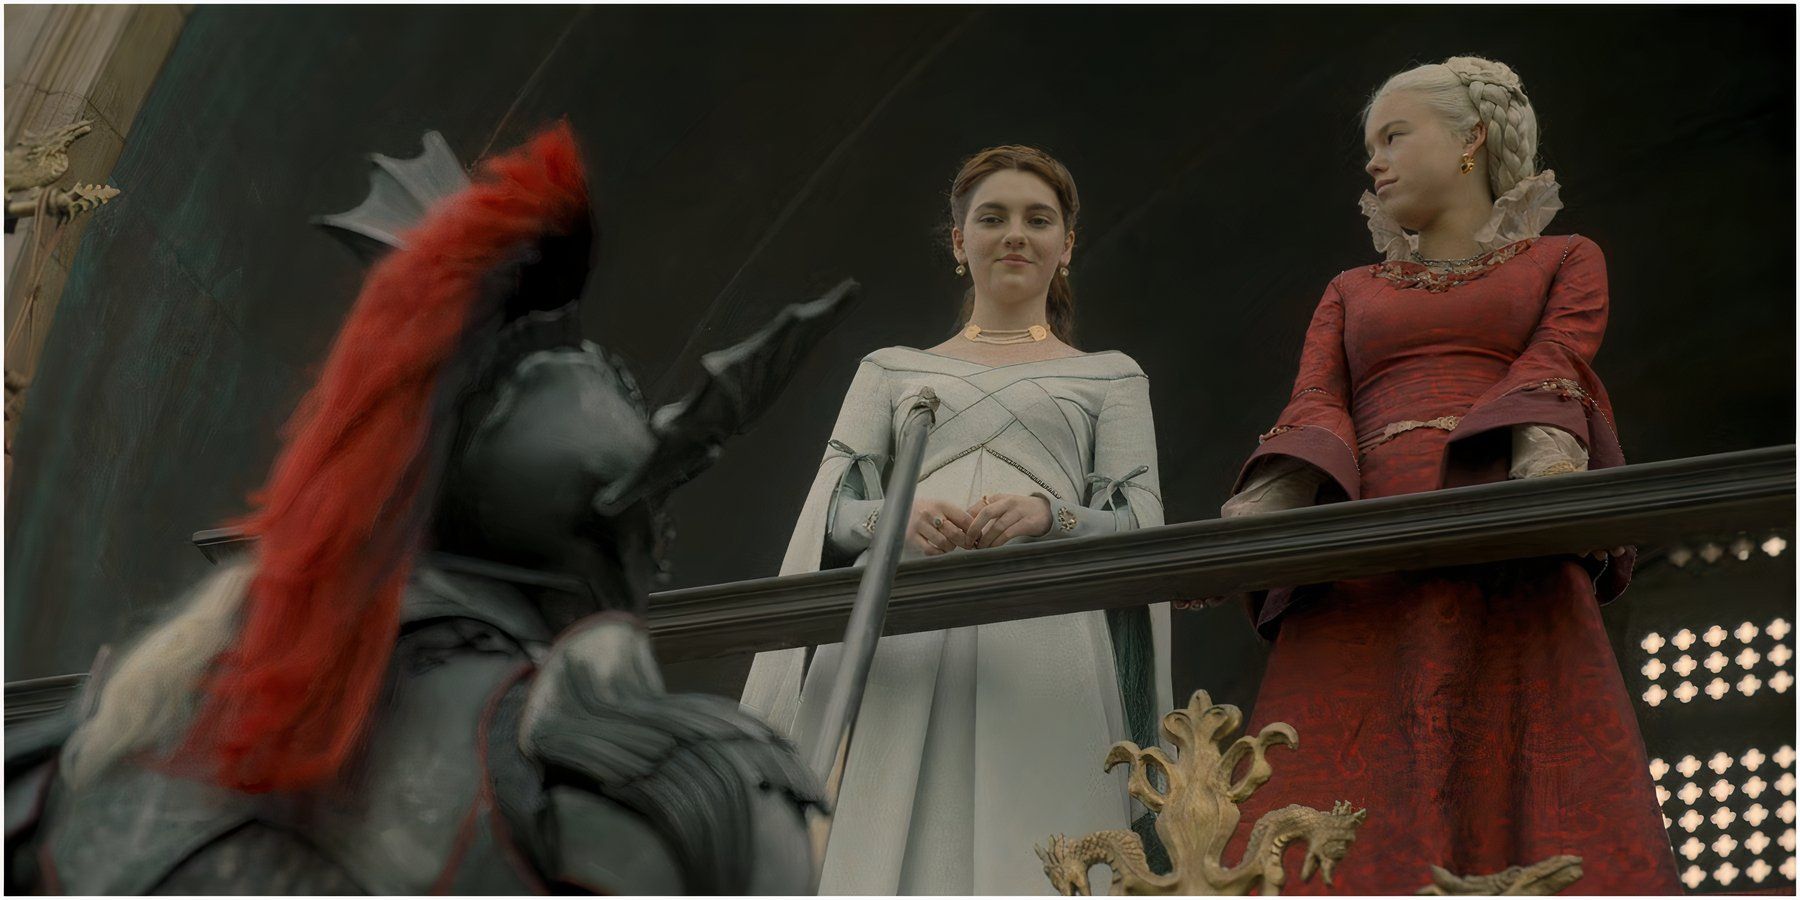 Daemon Targaryen Alicent Hightower and Rhaenyra Targaryen in House of the Dragon.